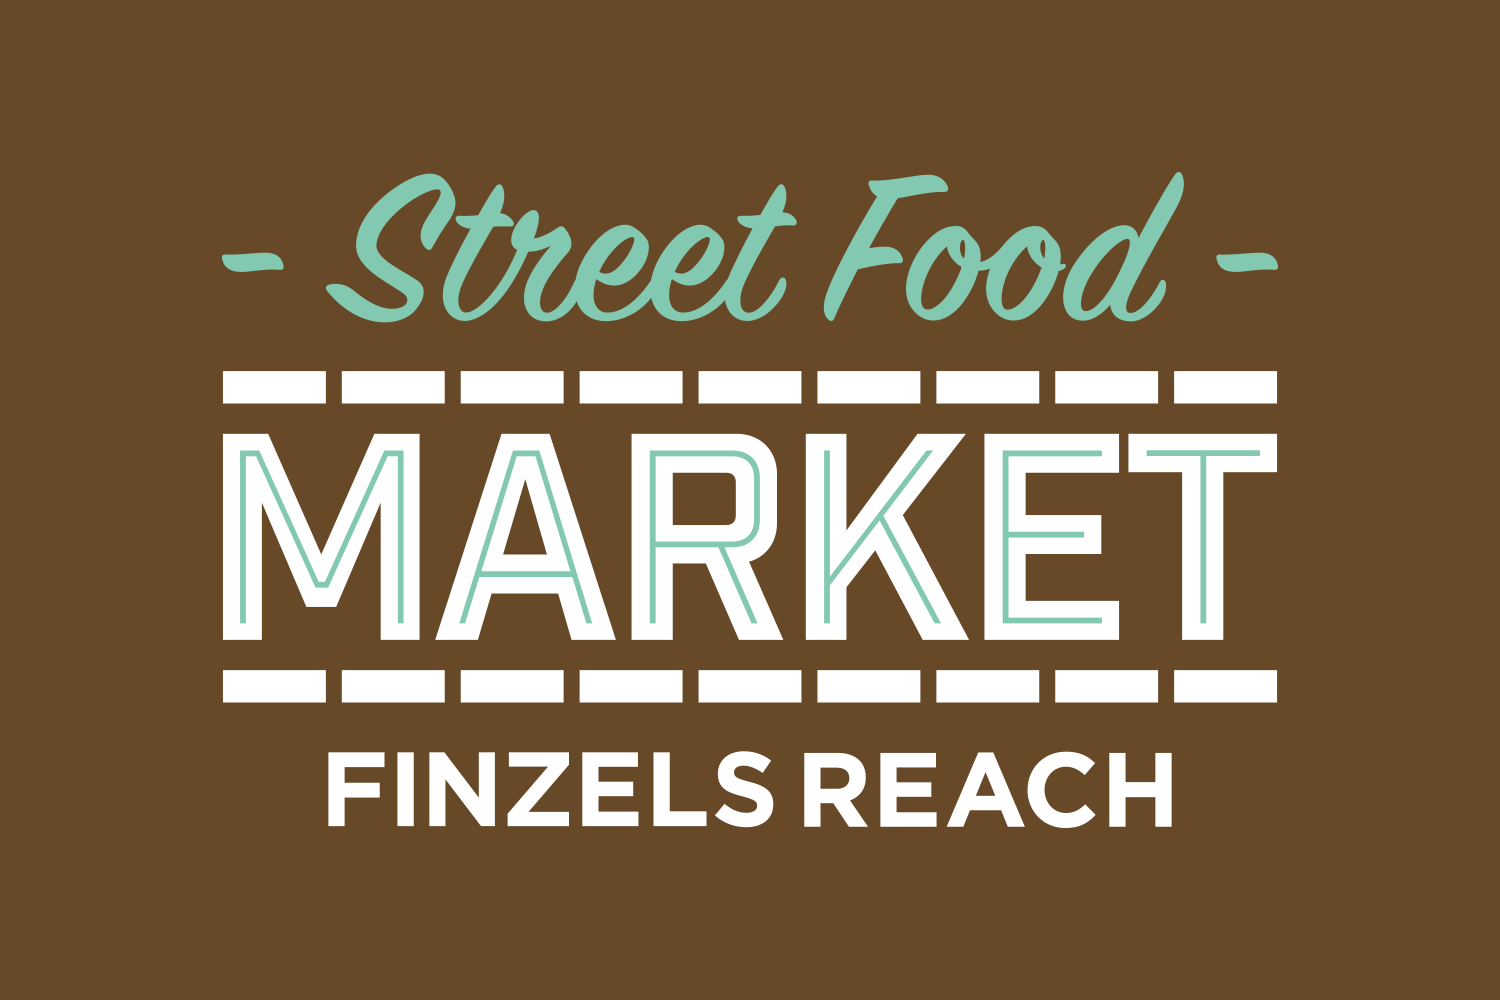 Food Market Logo - Finzels Reach Street Food Market - Emily Noon Design